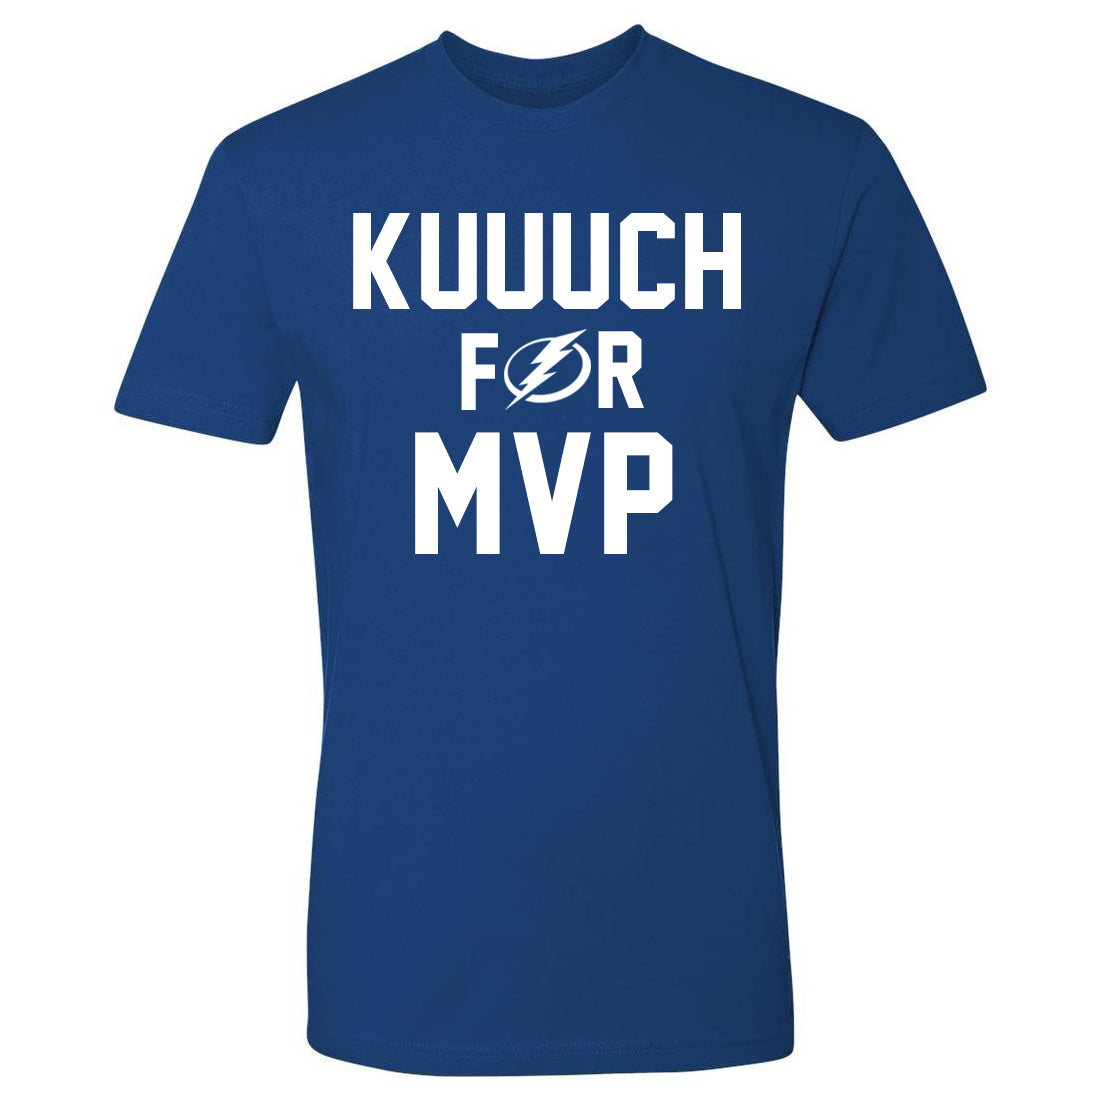 Tampa Bay Lightning KUUUCH FOR MVP T-shirt